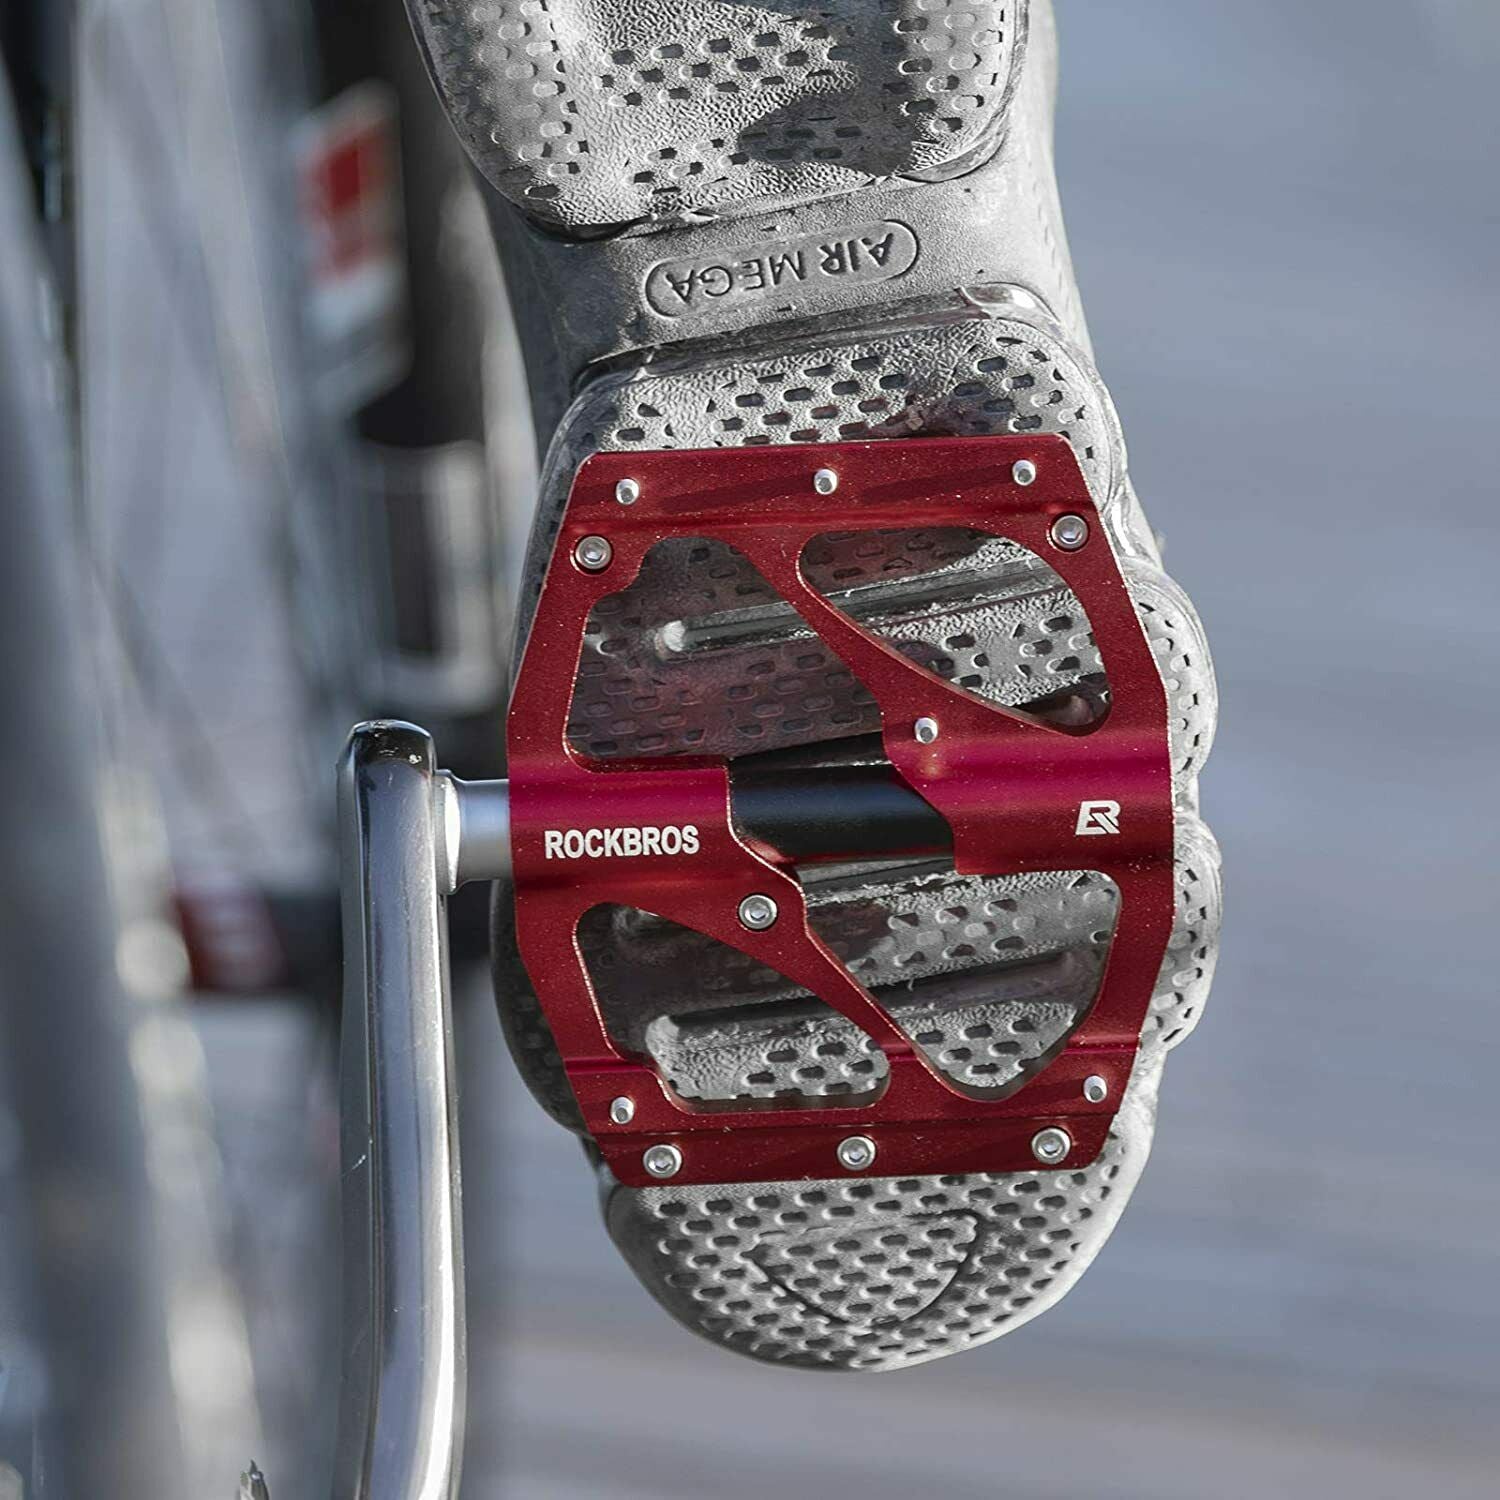 ROCKBROS Super Lightweight Bike Pedals in Black or Red (Pair)